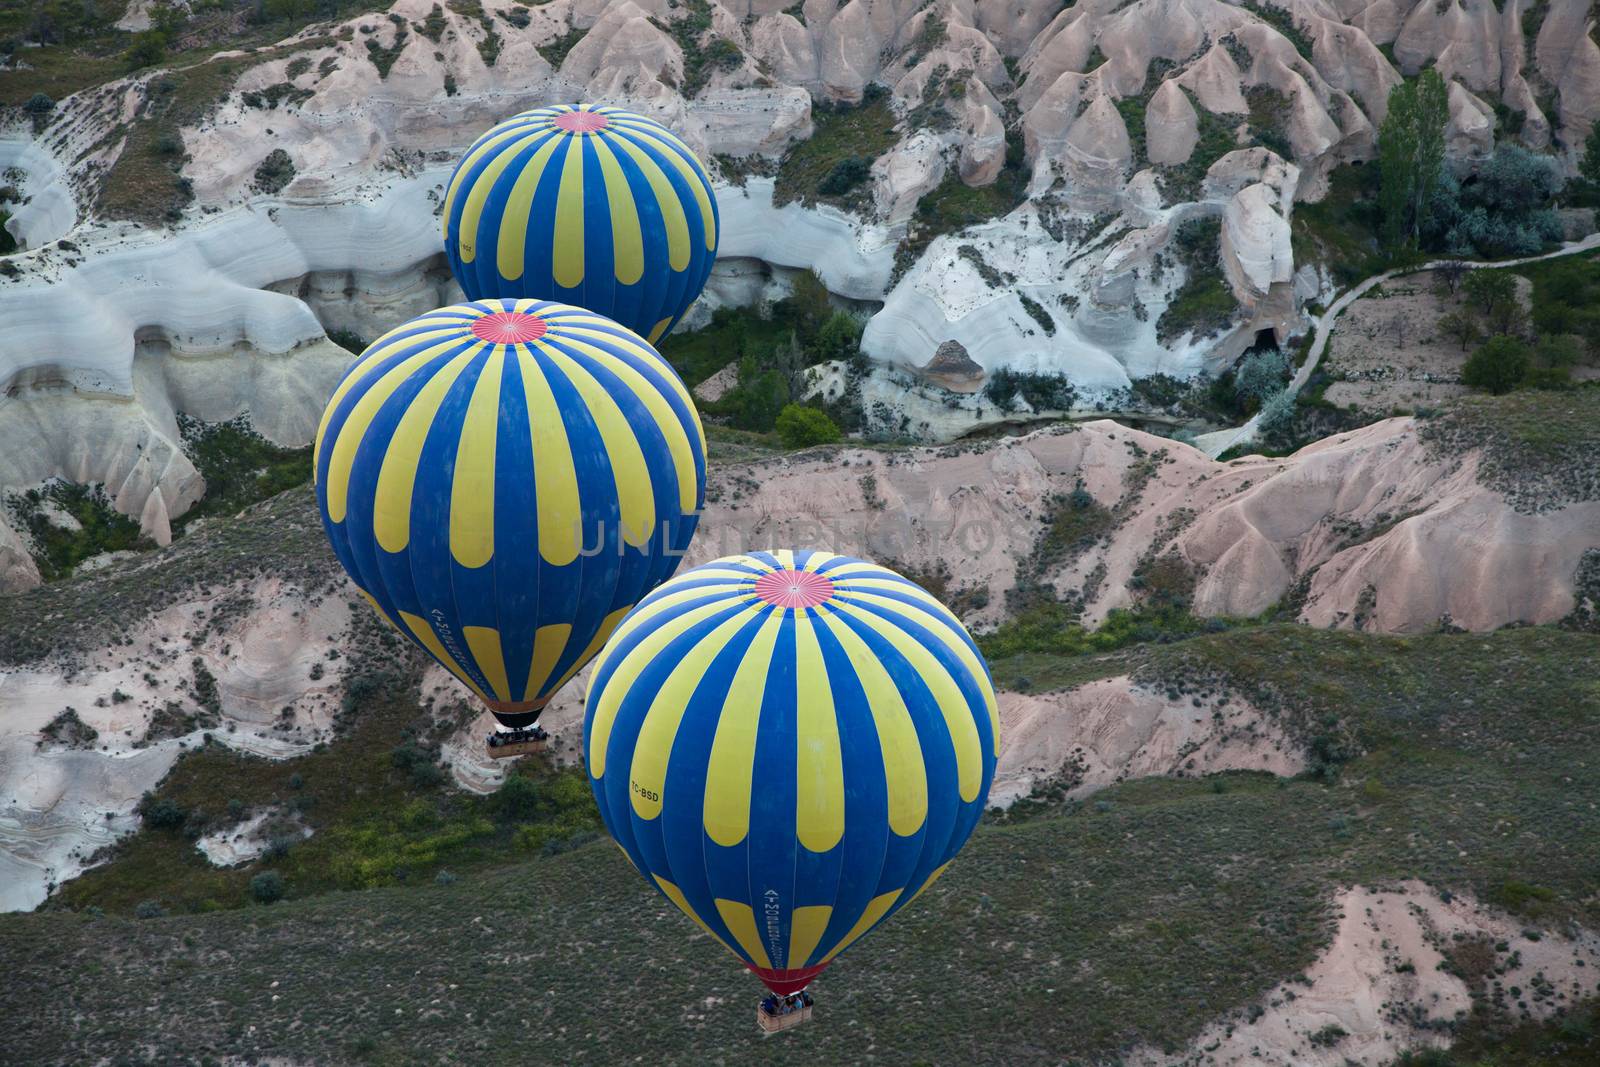 Pair of hot air balloons cruising in air